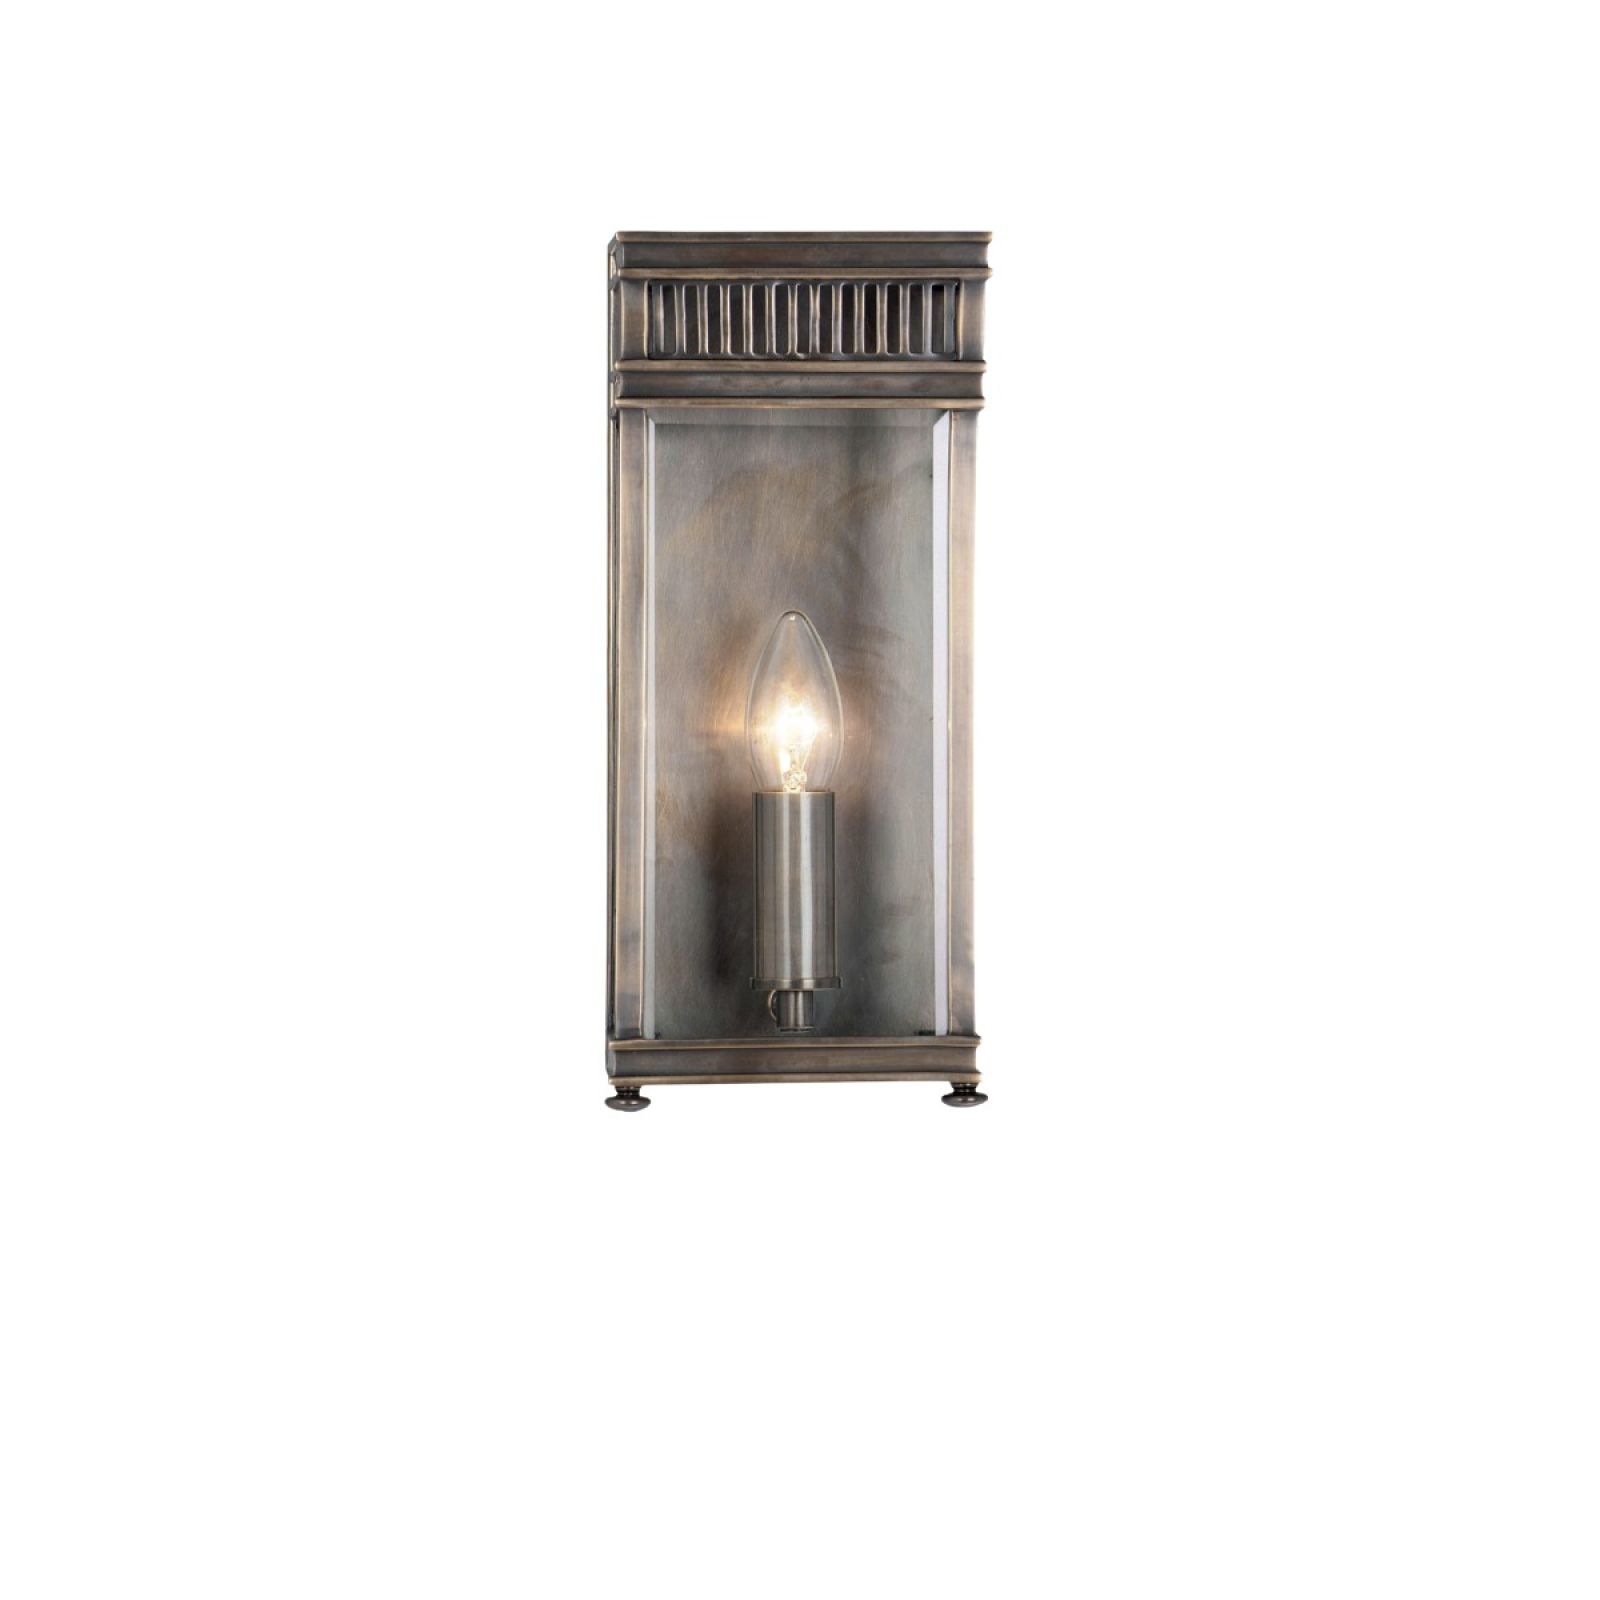 Holborn wall lantern in dark bronze - small